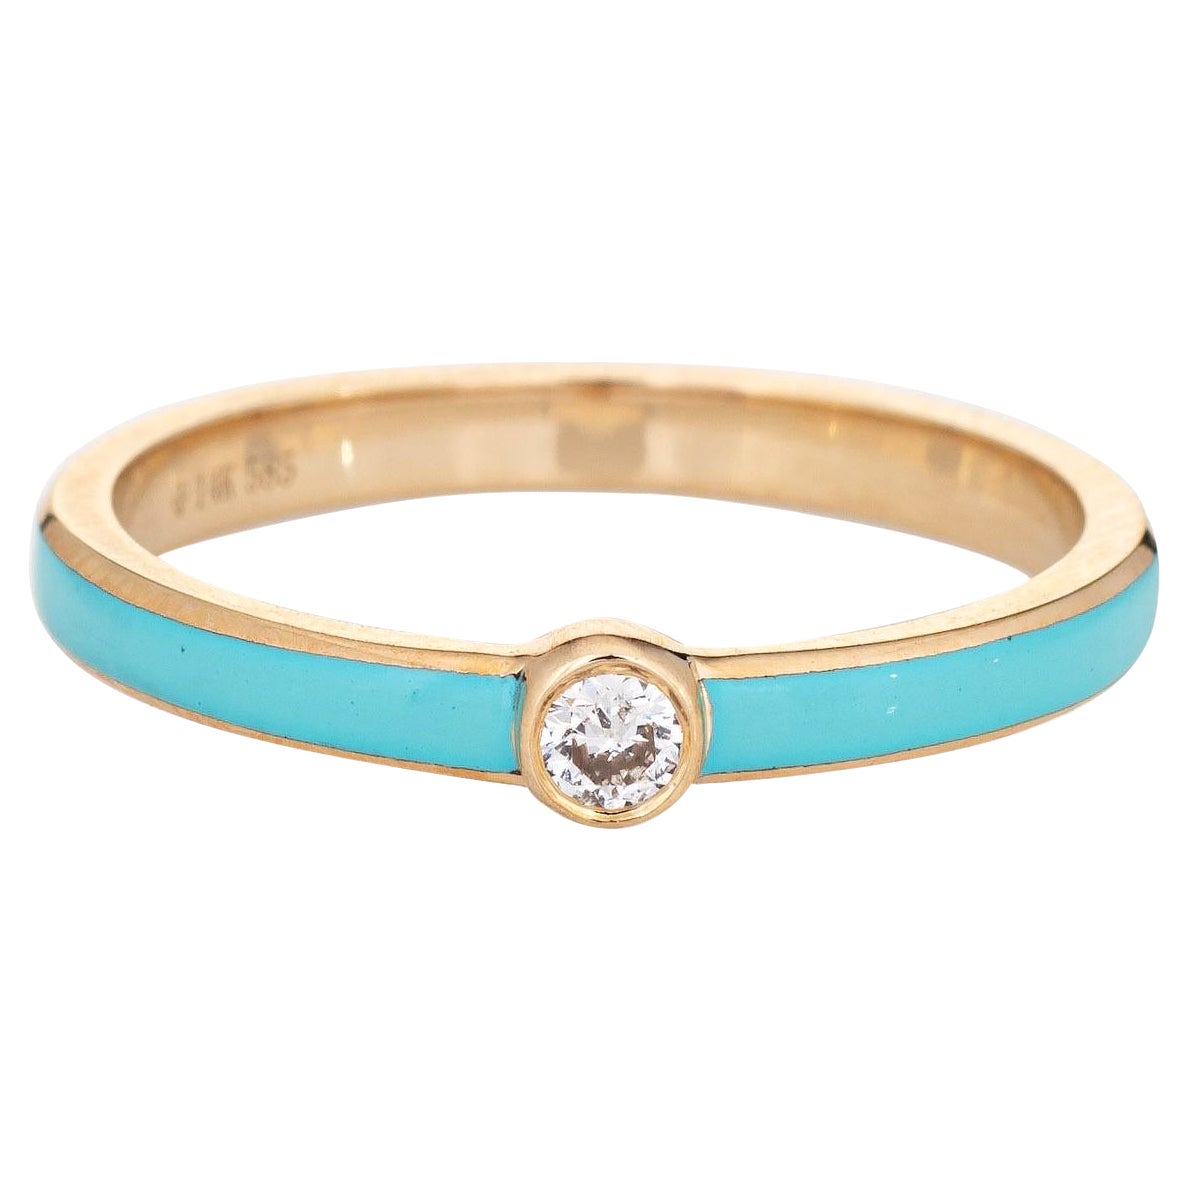 Turquoise Enamel Diamond Ring 14k Yellow Gold Stacking Band Jewelry